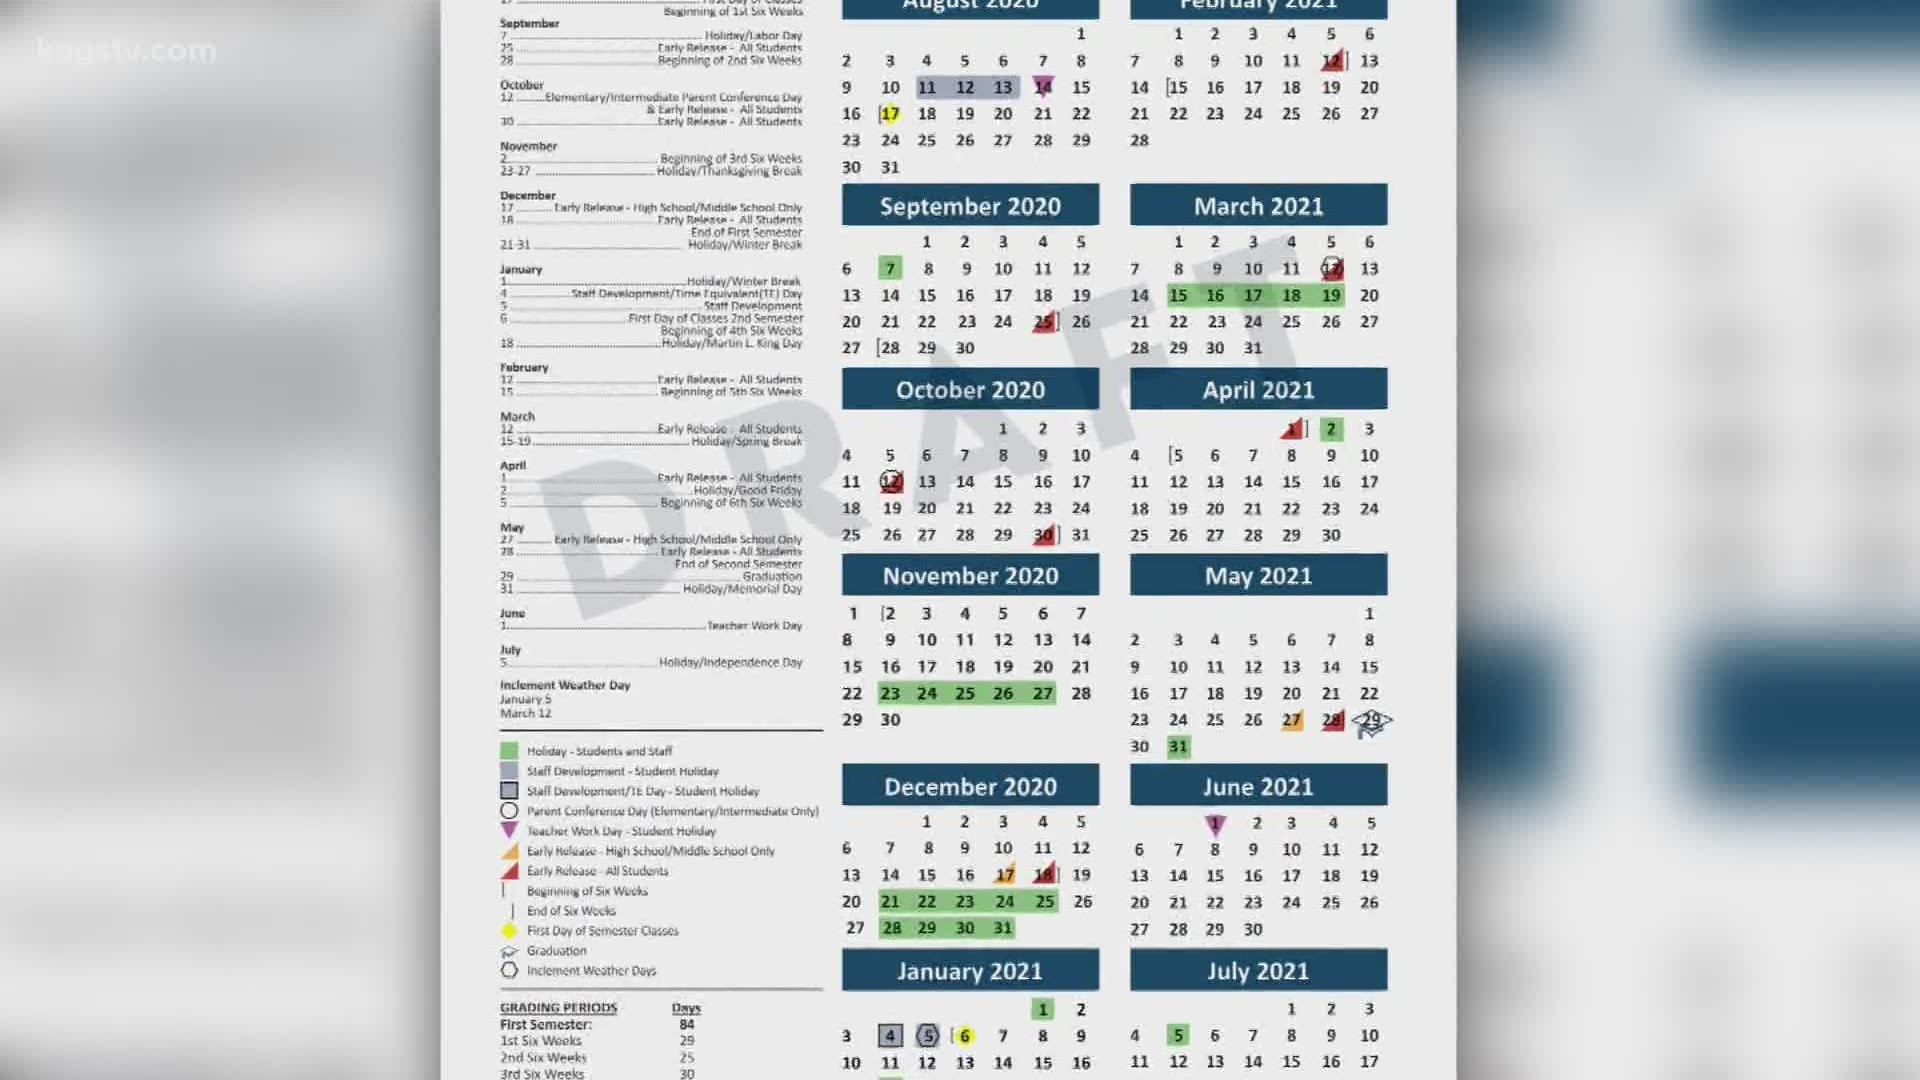 College Station Isd Calendar 2022 2023 Bryan Isd Adds Eight Days To 2020-2021 Academic Calendar | Kagstv.com